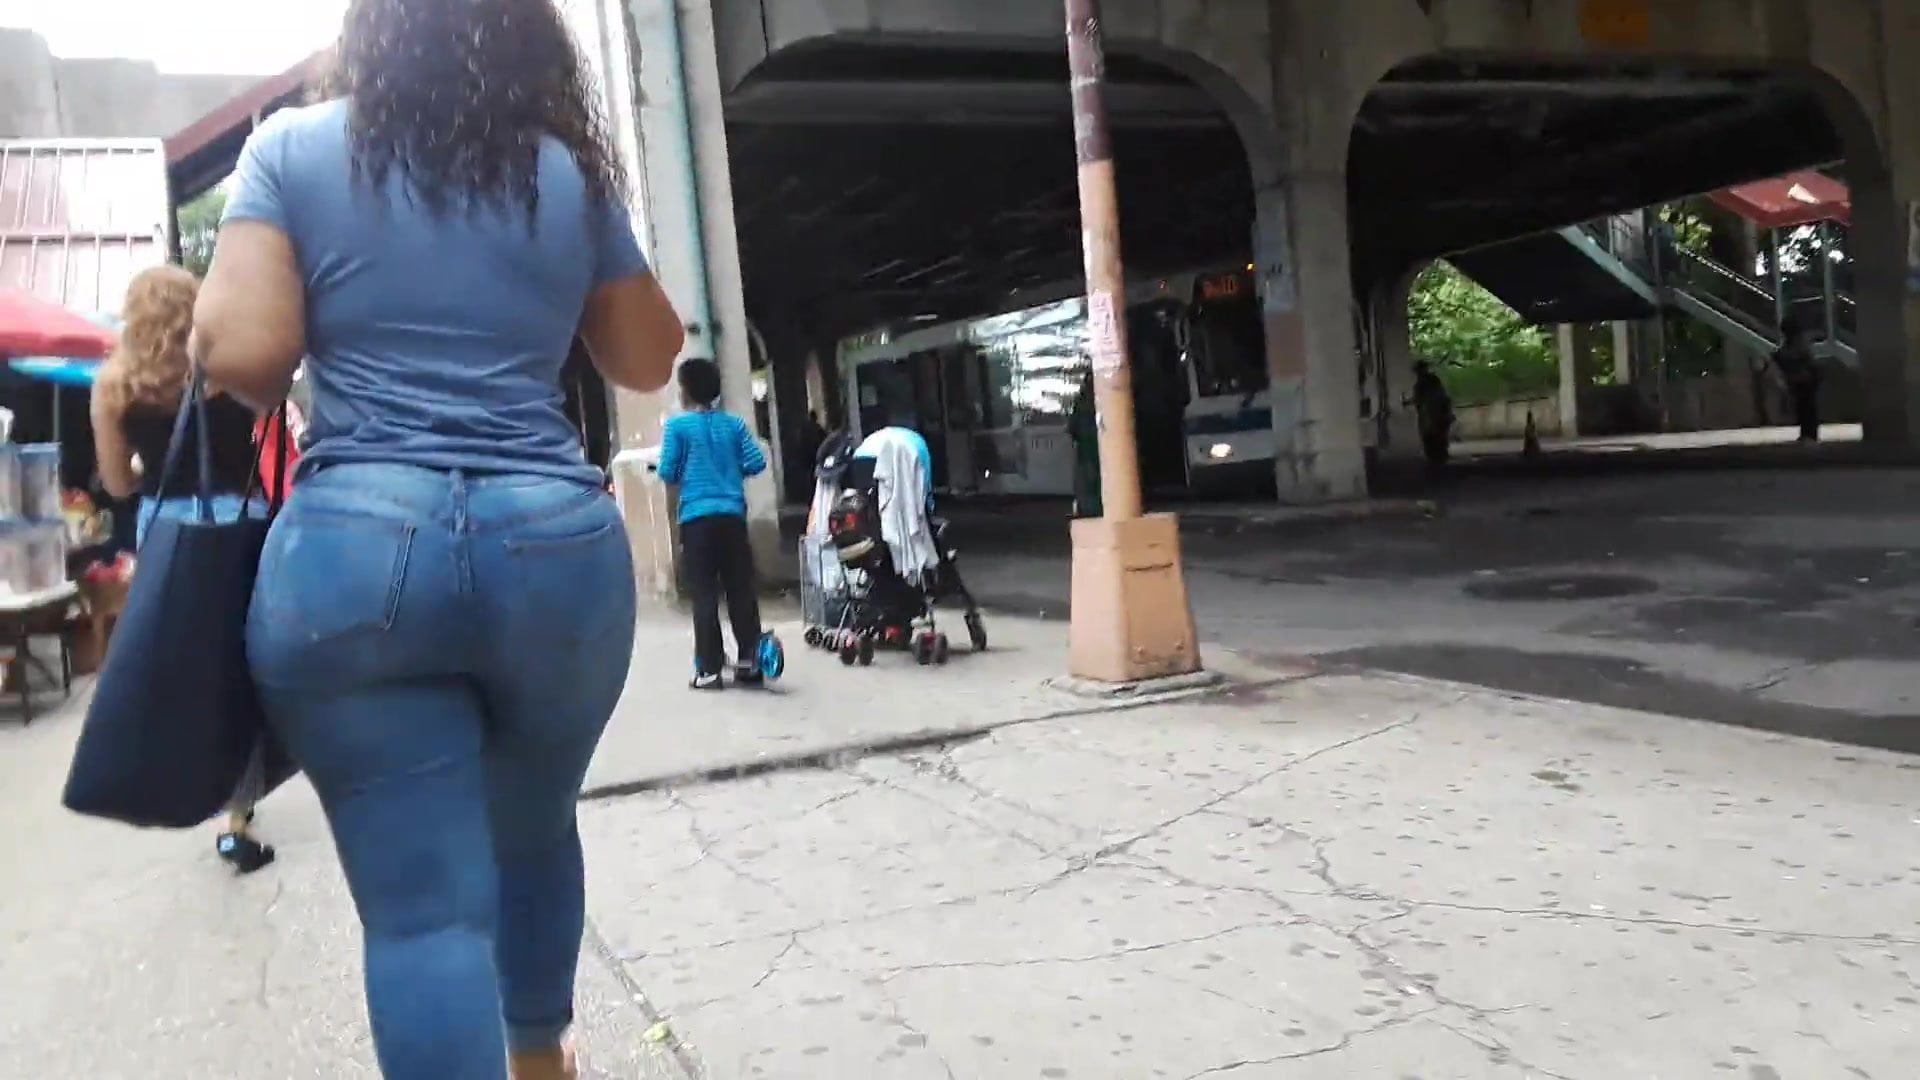 Big Ass walking to the Subway